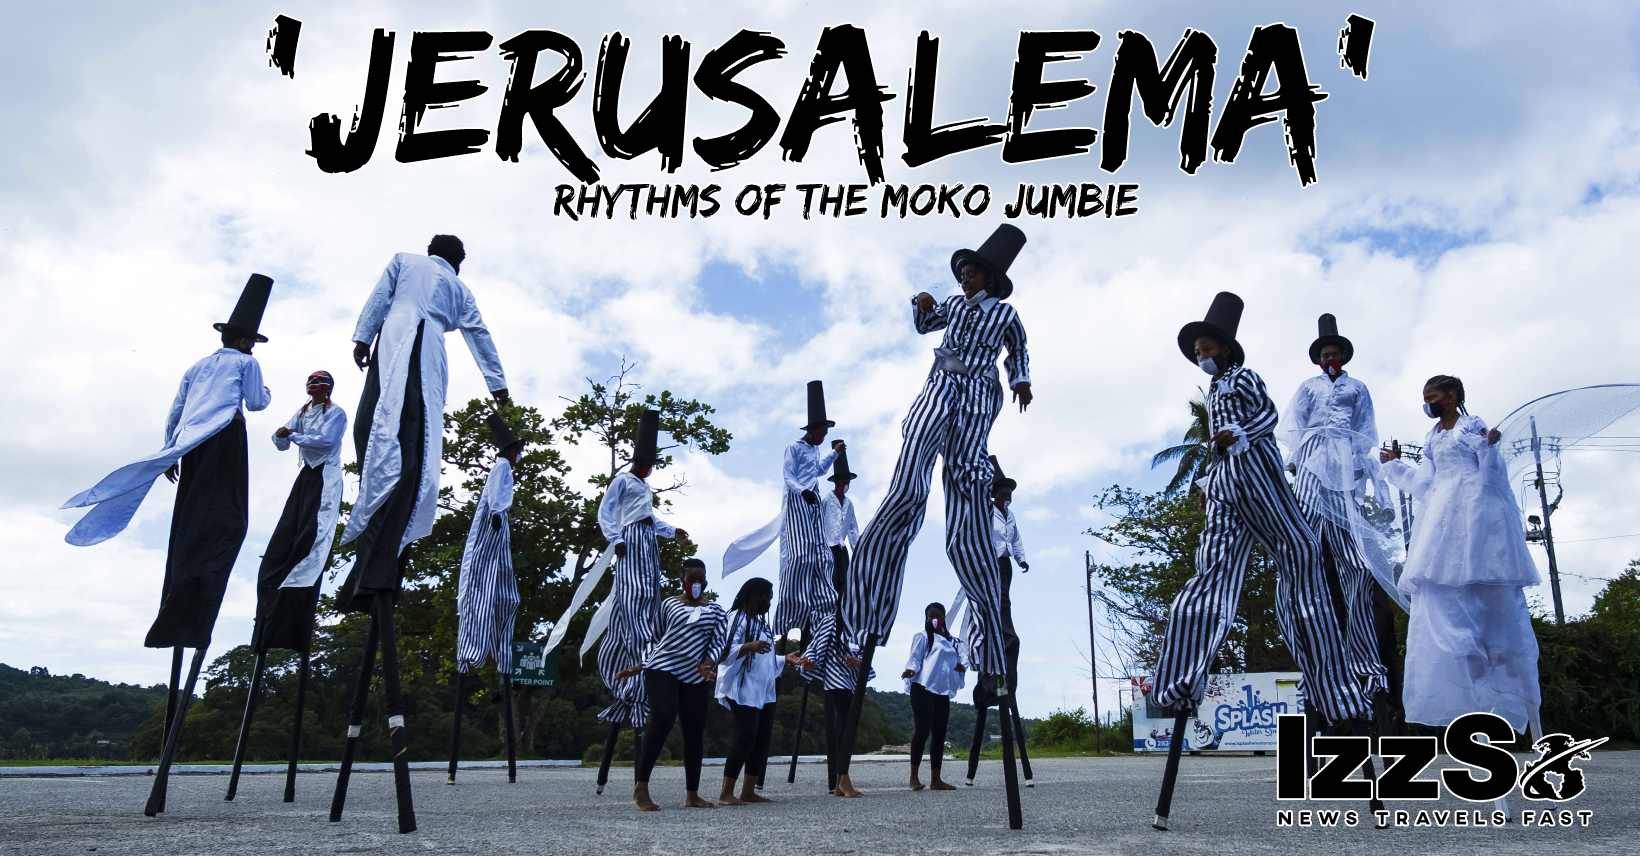 The ‘Jerusalema’ Rhythms of the Moko Jumbie